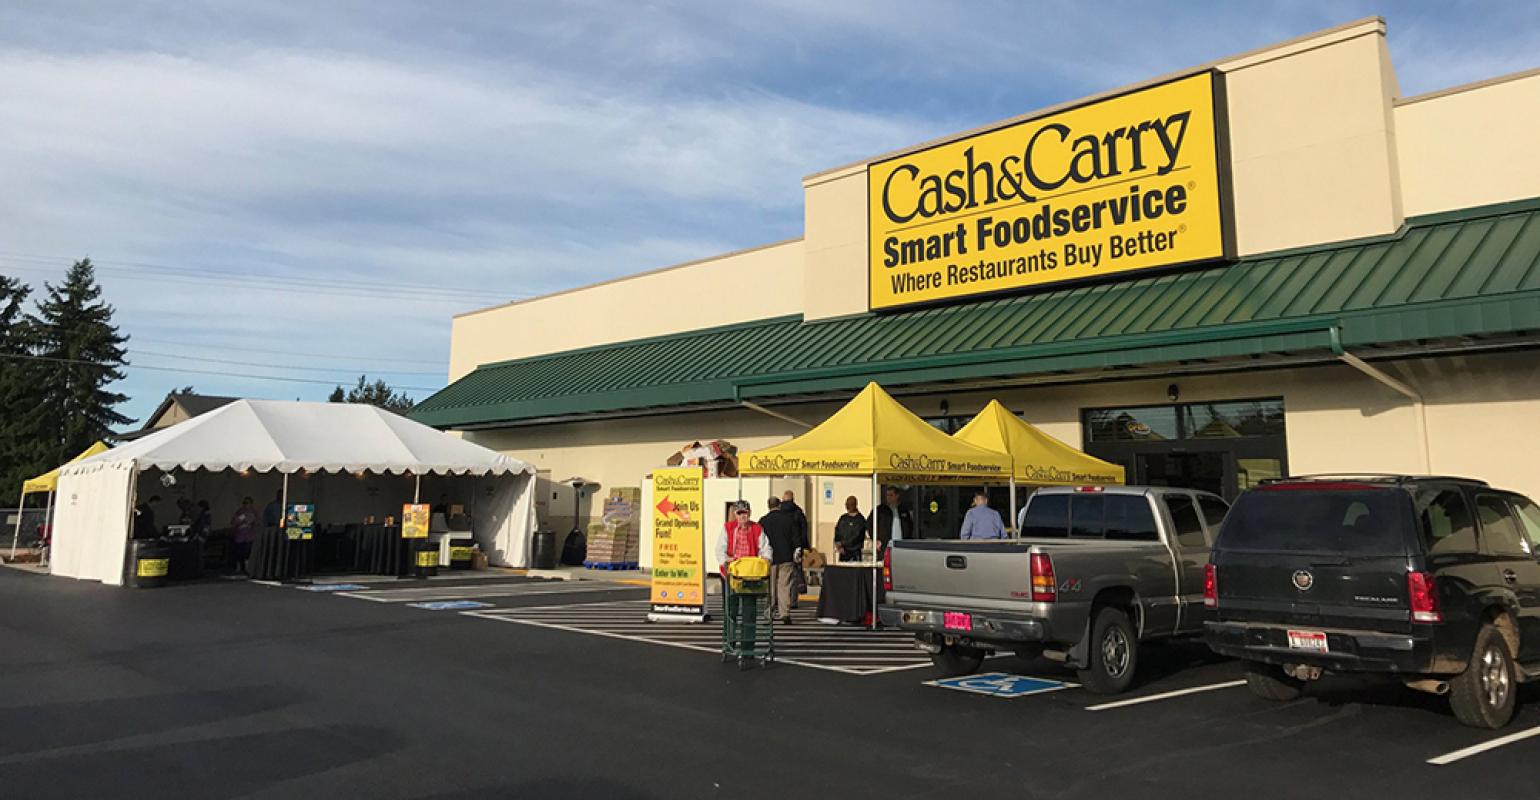 Cash & Carry president given broader role Supermarket News